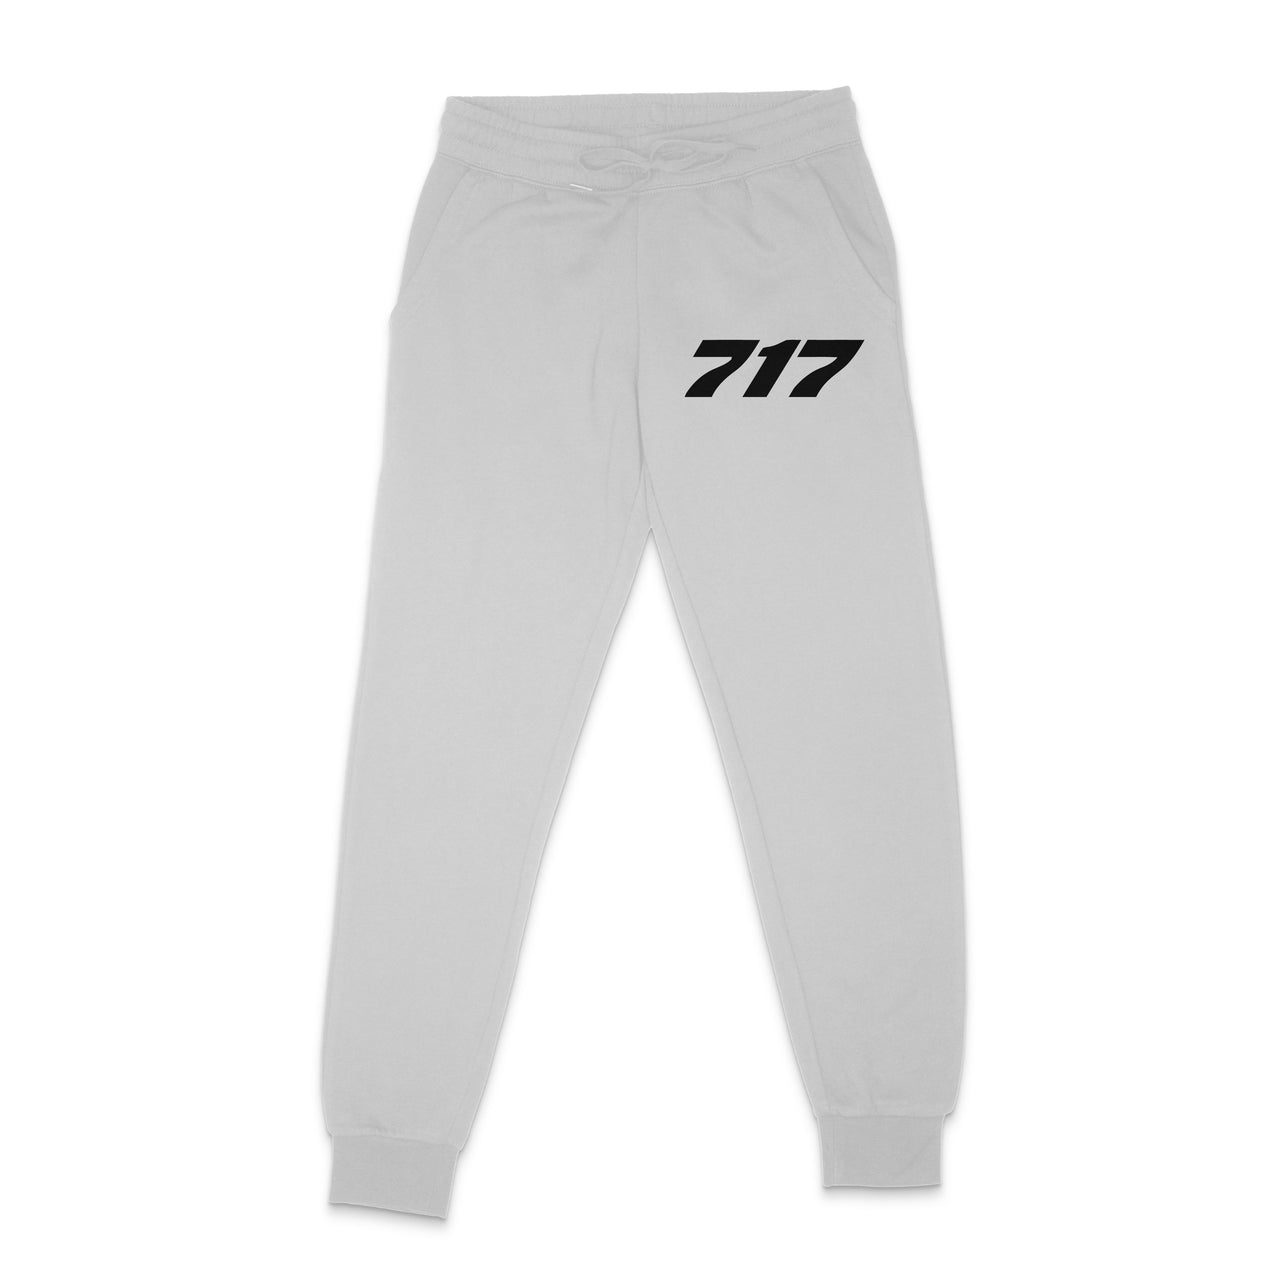 717 Flat Text Designed Sweatpants